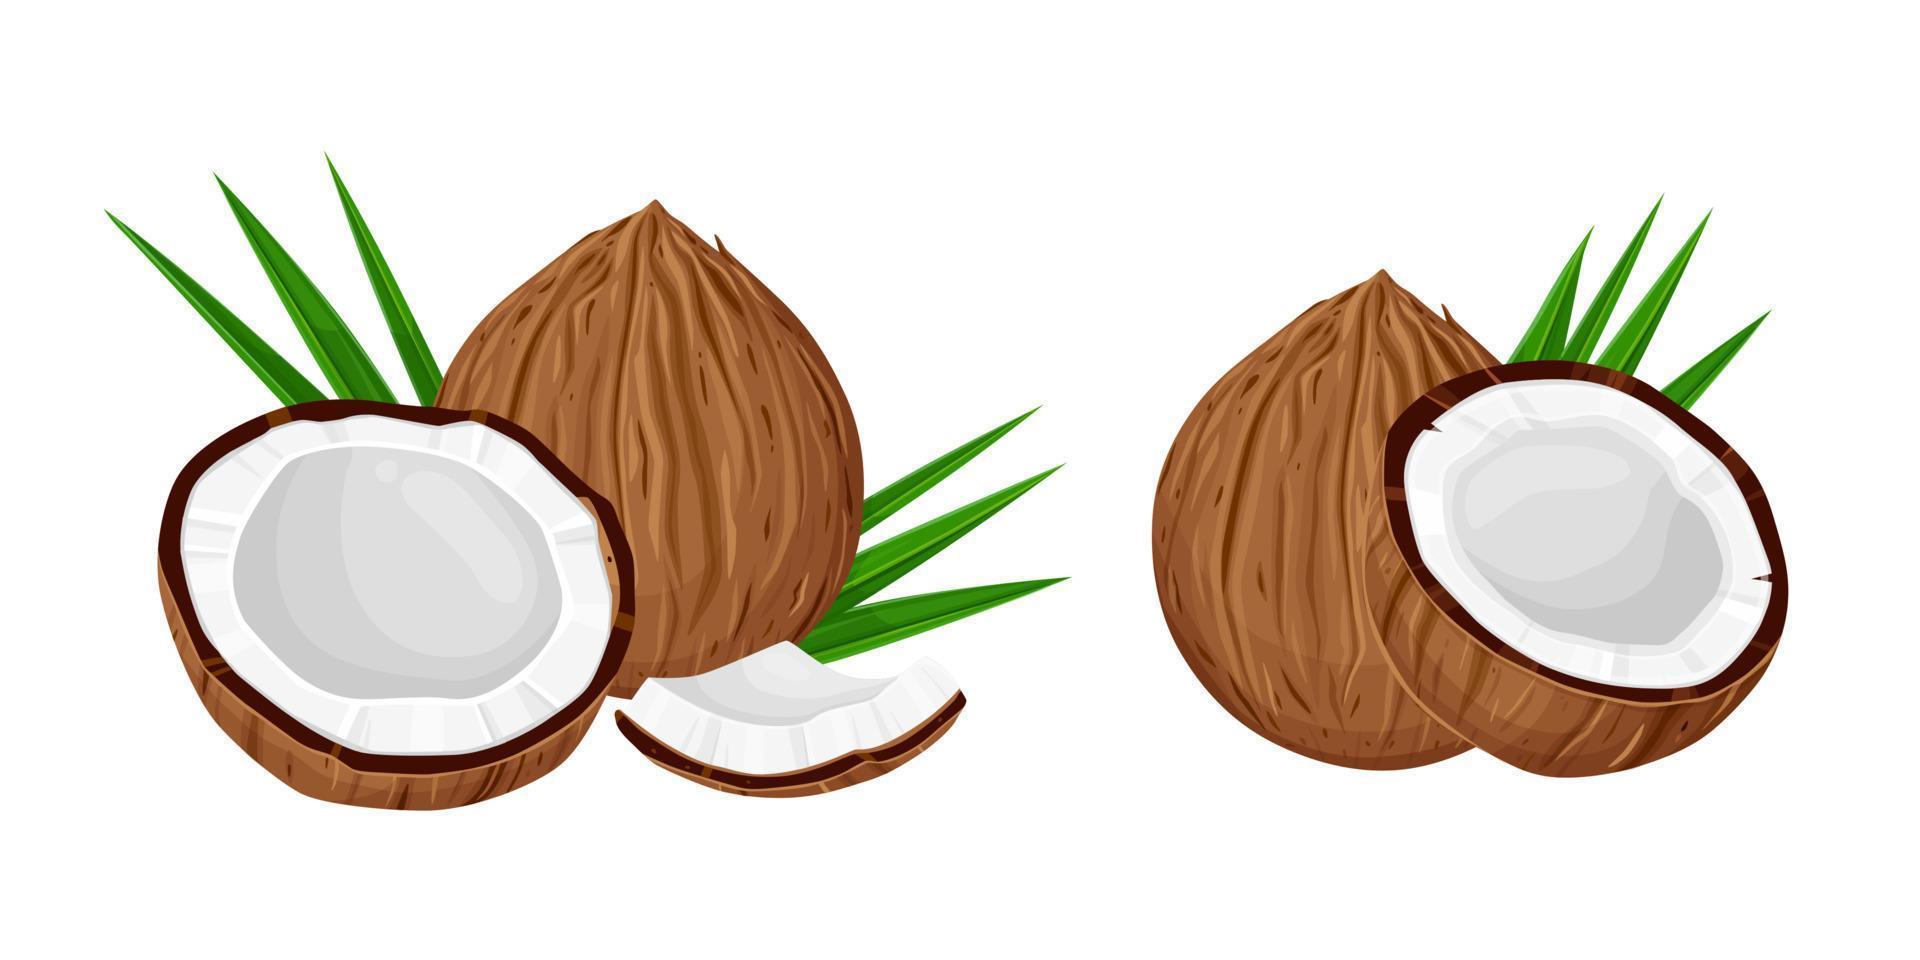 Kokosnüsse und Kokosnuss Hälfte mit Blätter isoliert auf ein Weiß Hintergrund. Vektor Illustration Karikatur eben Kokosnuss Symbol isoliert auf Weiß Hintergrund.